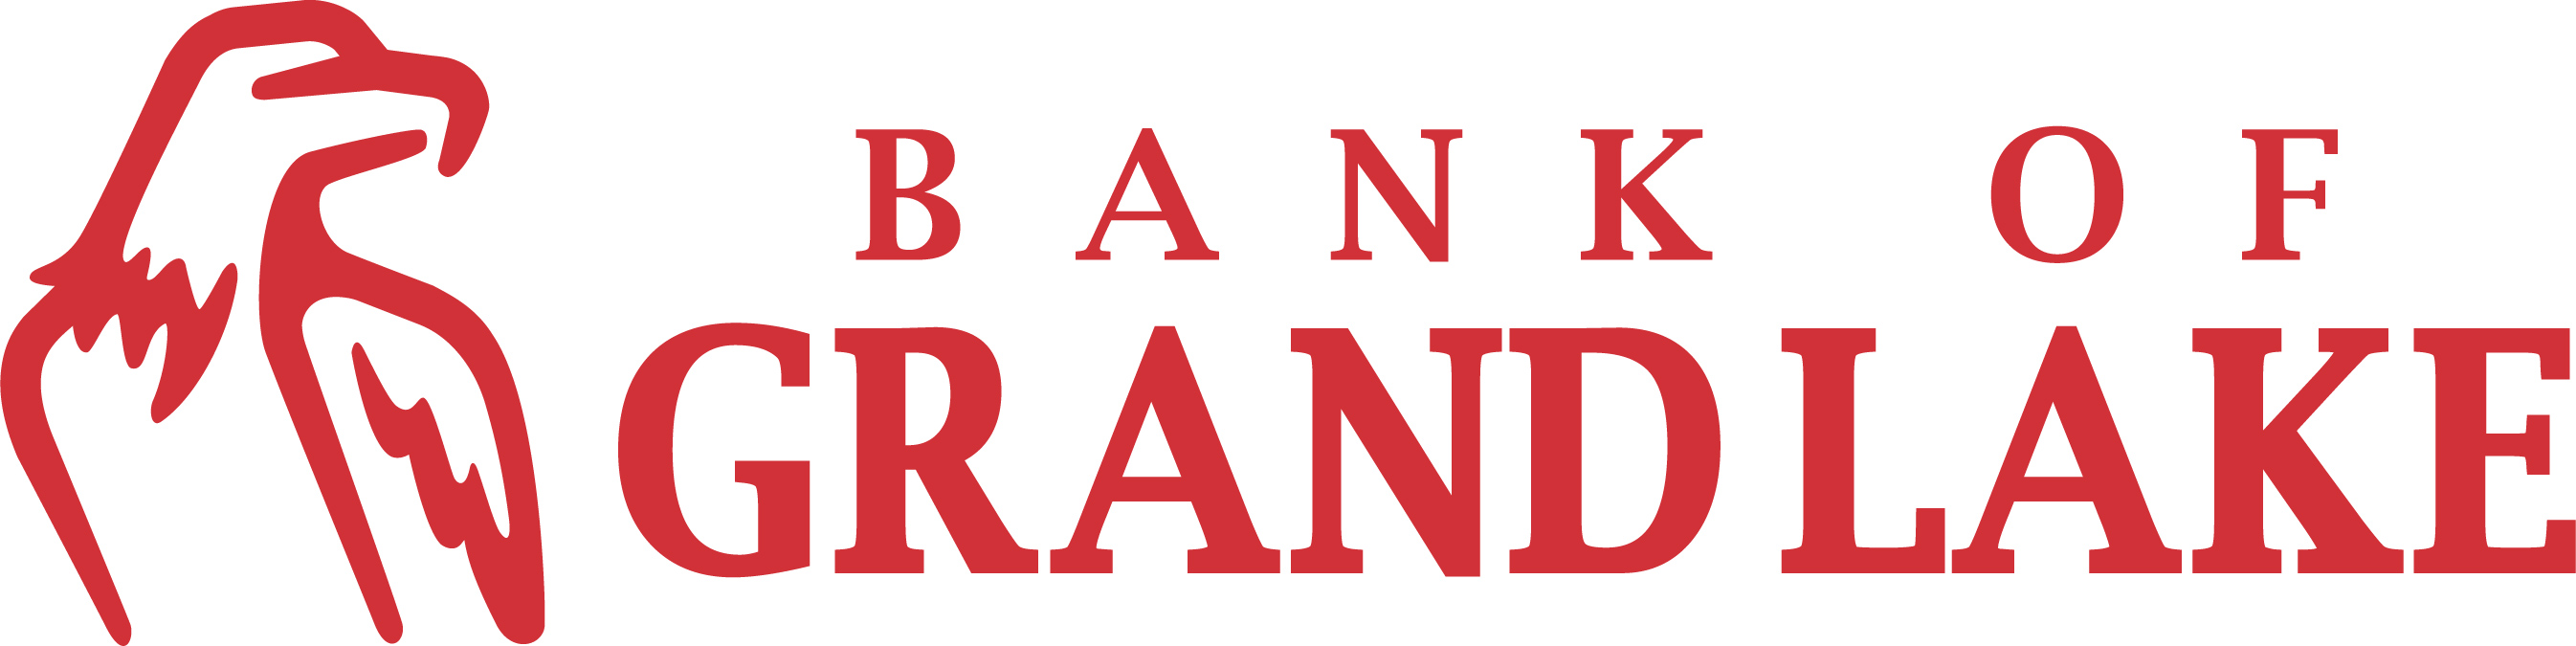 Bank of Grand Lake- https://www.bankofgrandlake.com/